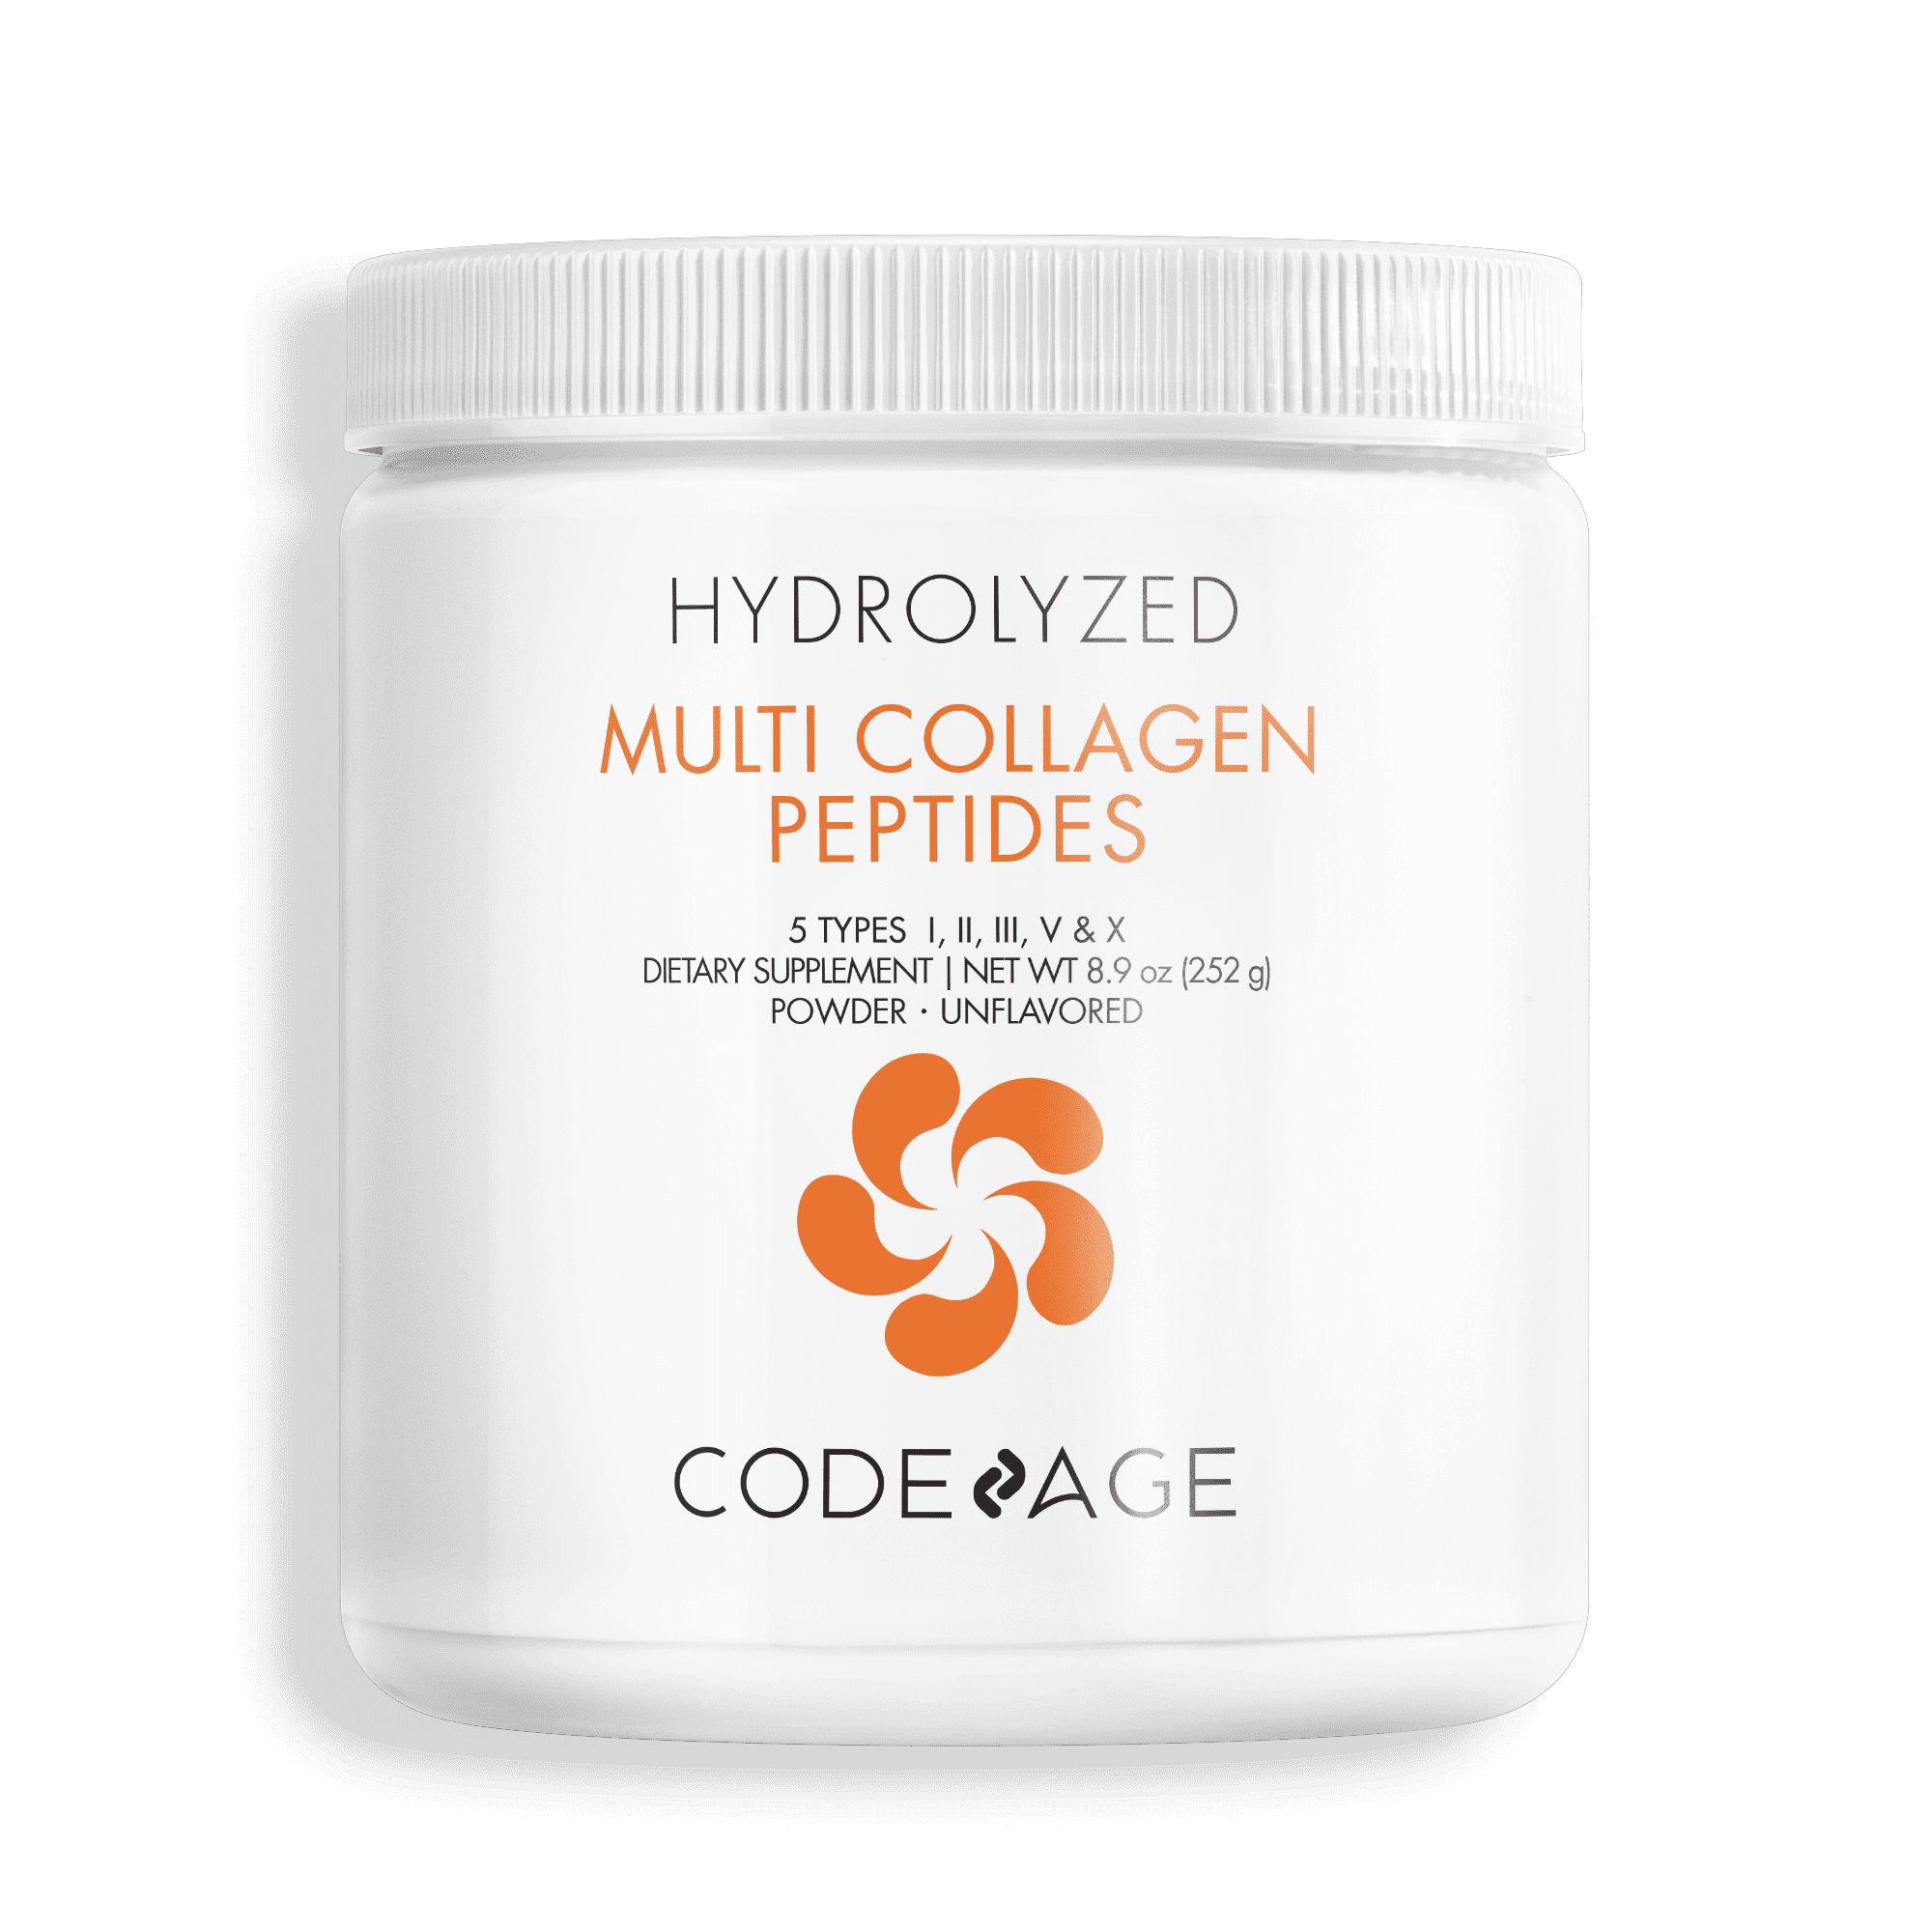 codeage hydrolyzed multi collagen peptides powder reviews